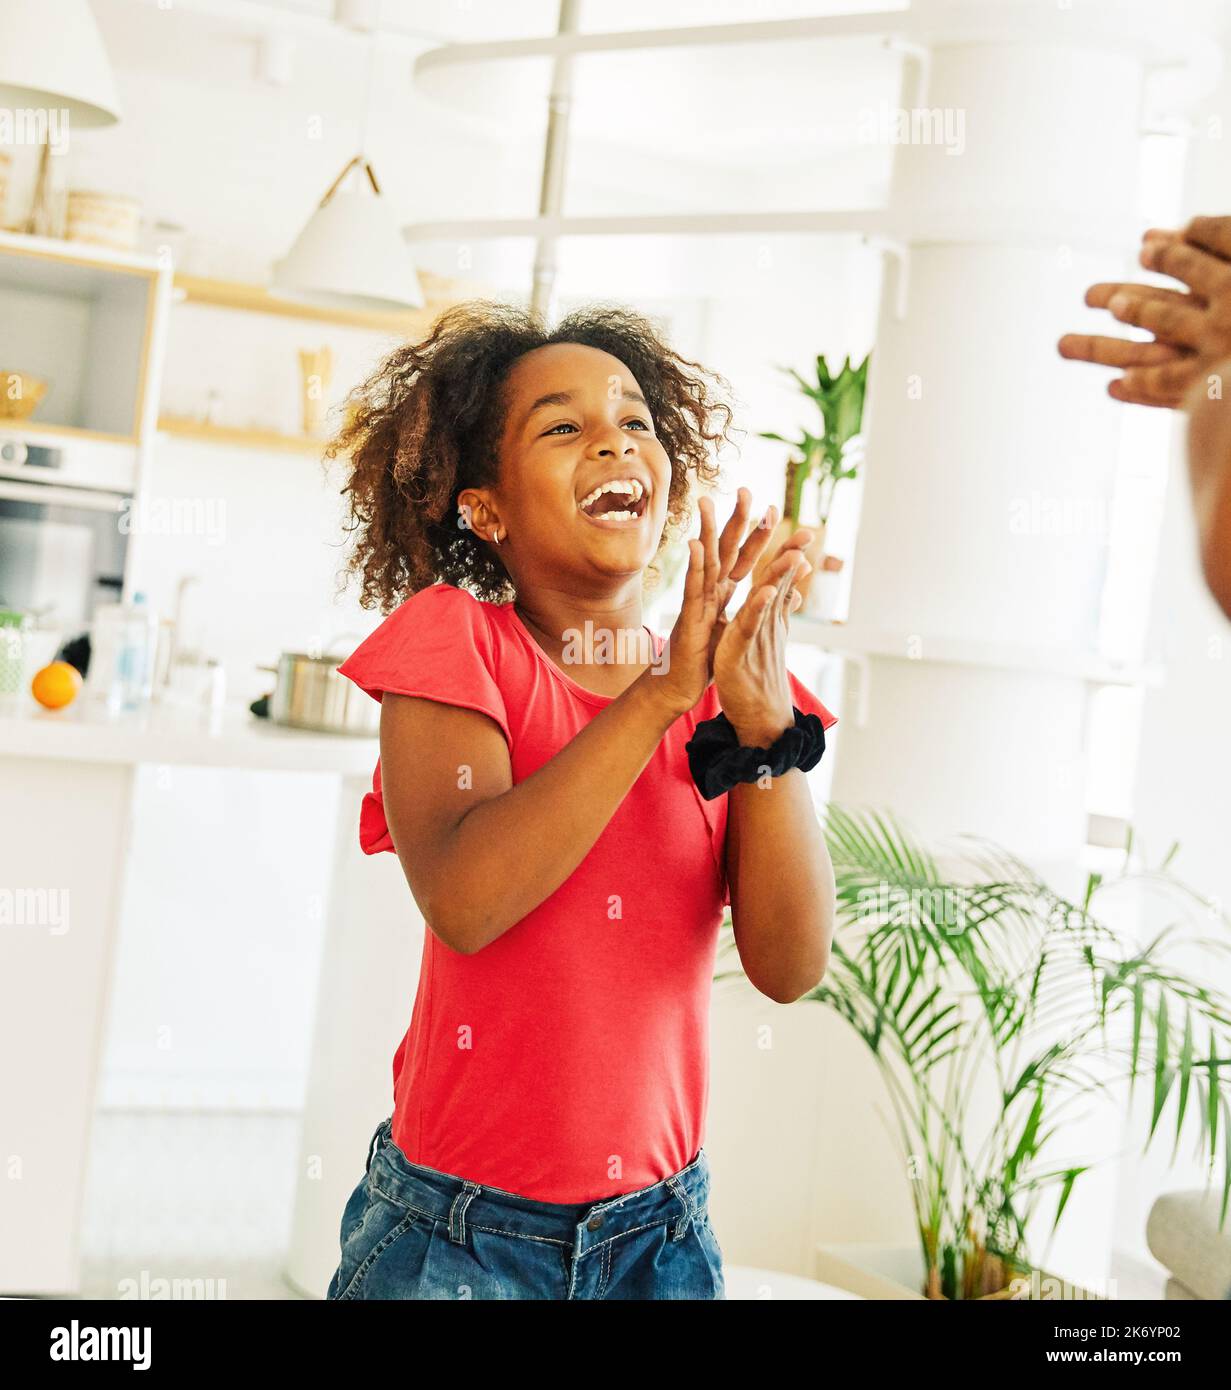 niño hija padre familia feliz jugando niño infancia bailando padre hogar mujer niña enlazando diversión alegre Foto de stock